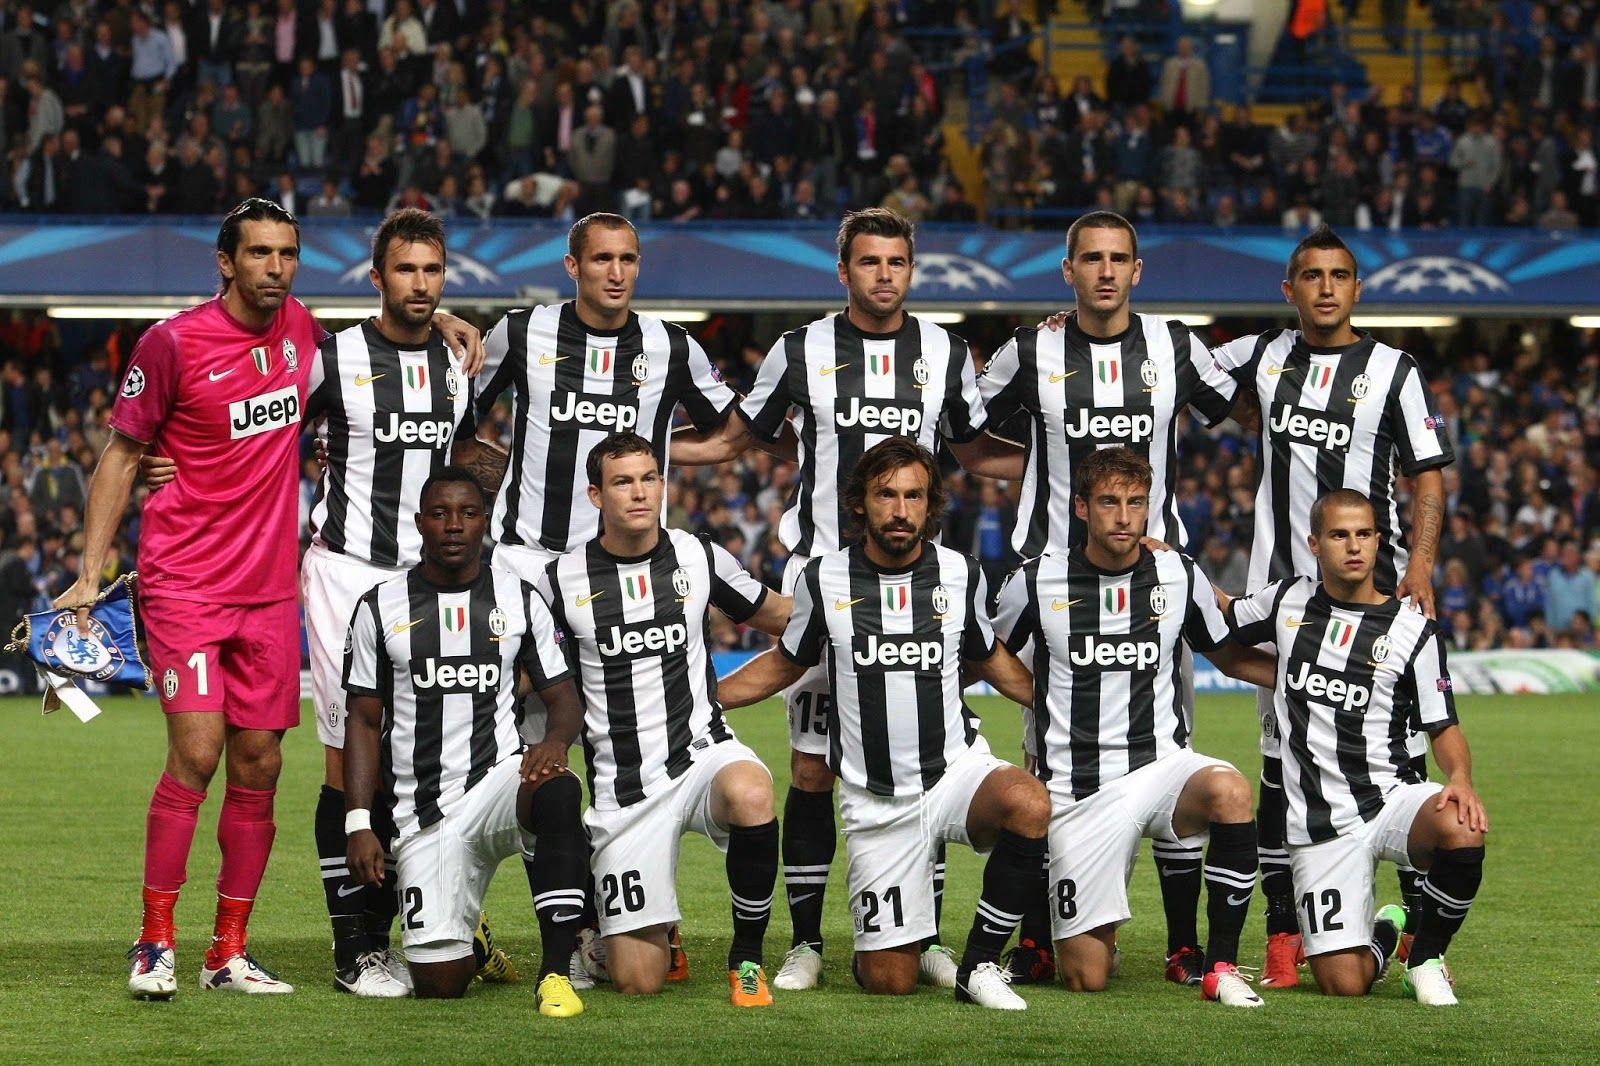 Free HD Juventus Football Club Wallpaper. Free Football Wallpaper